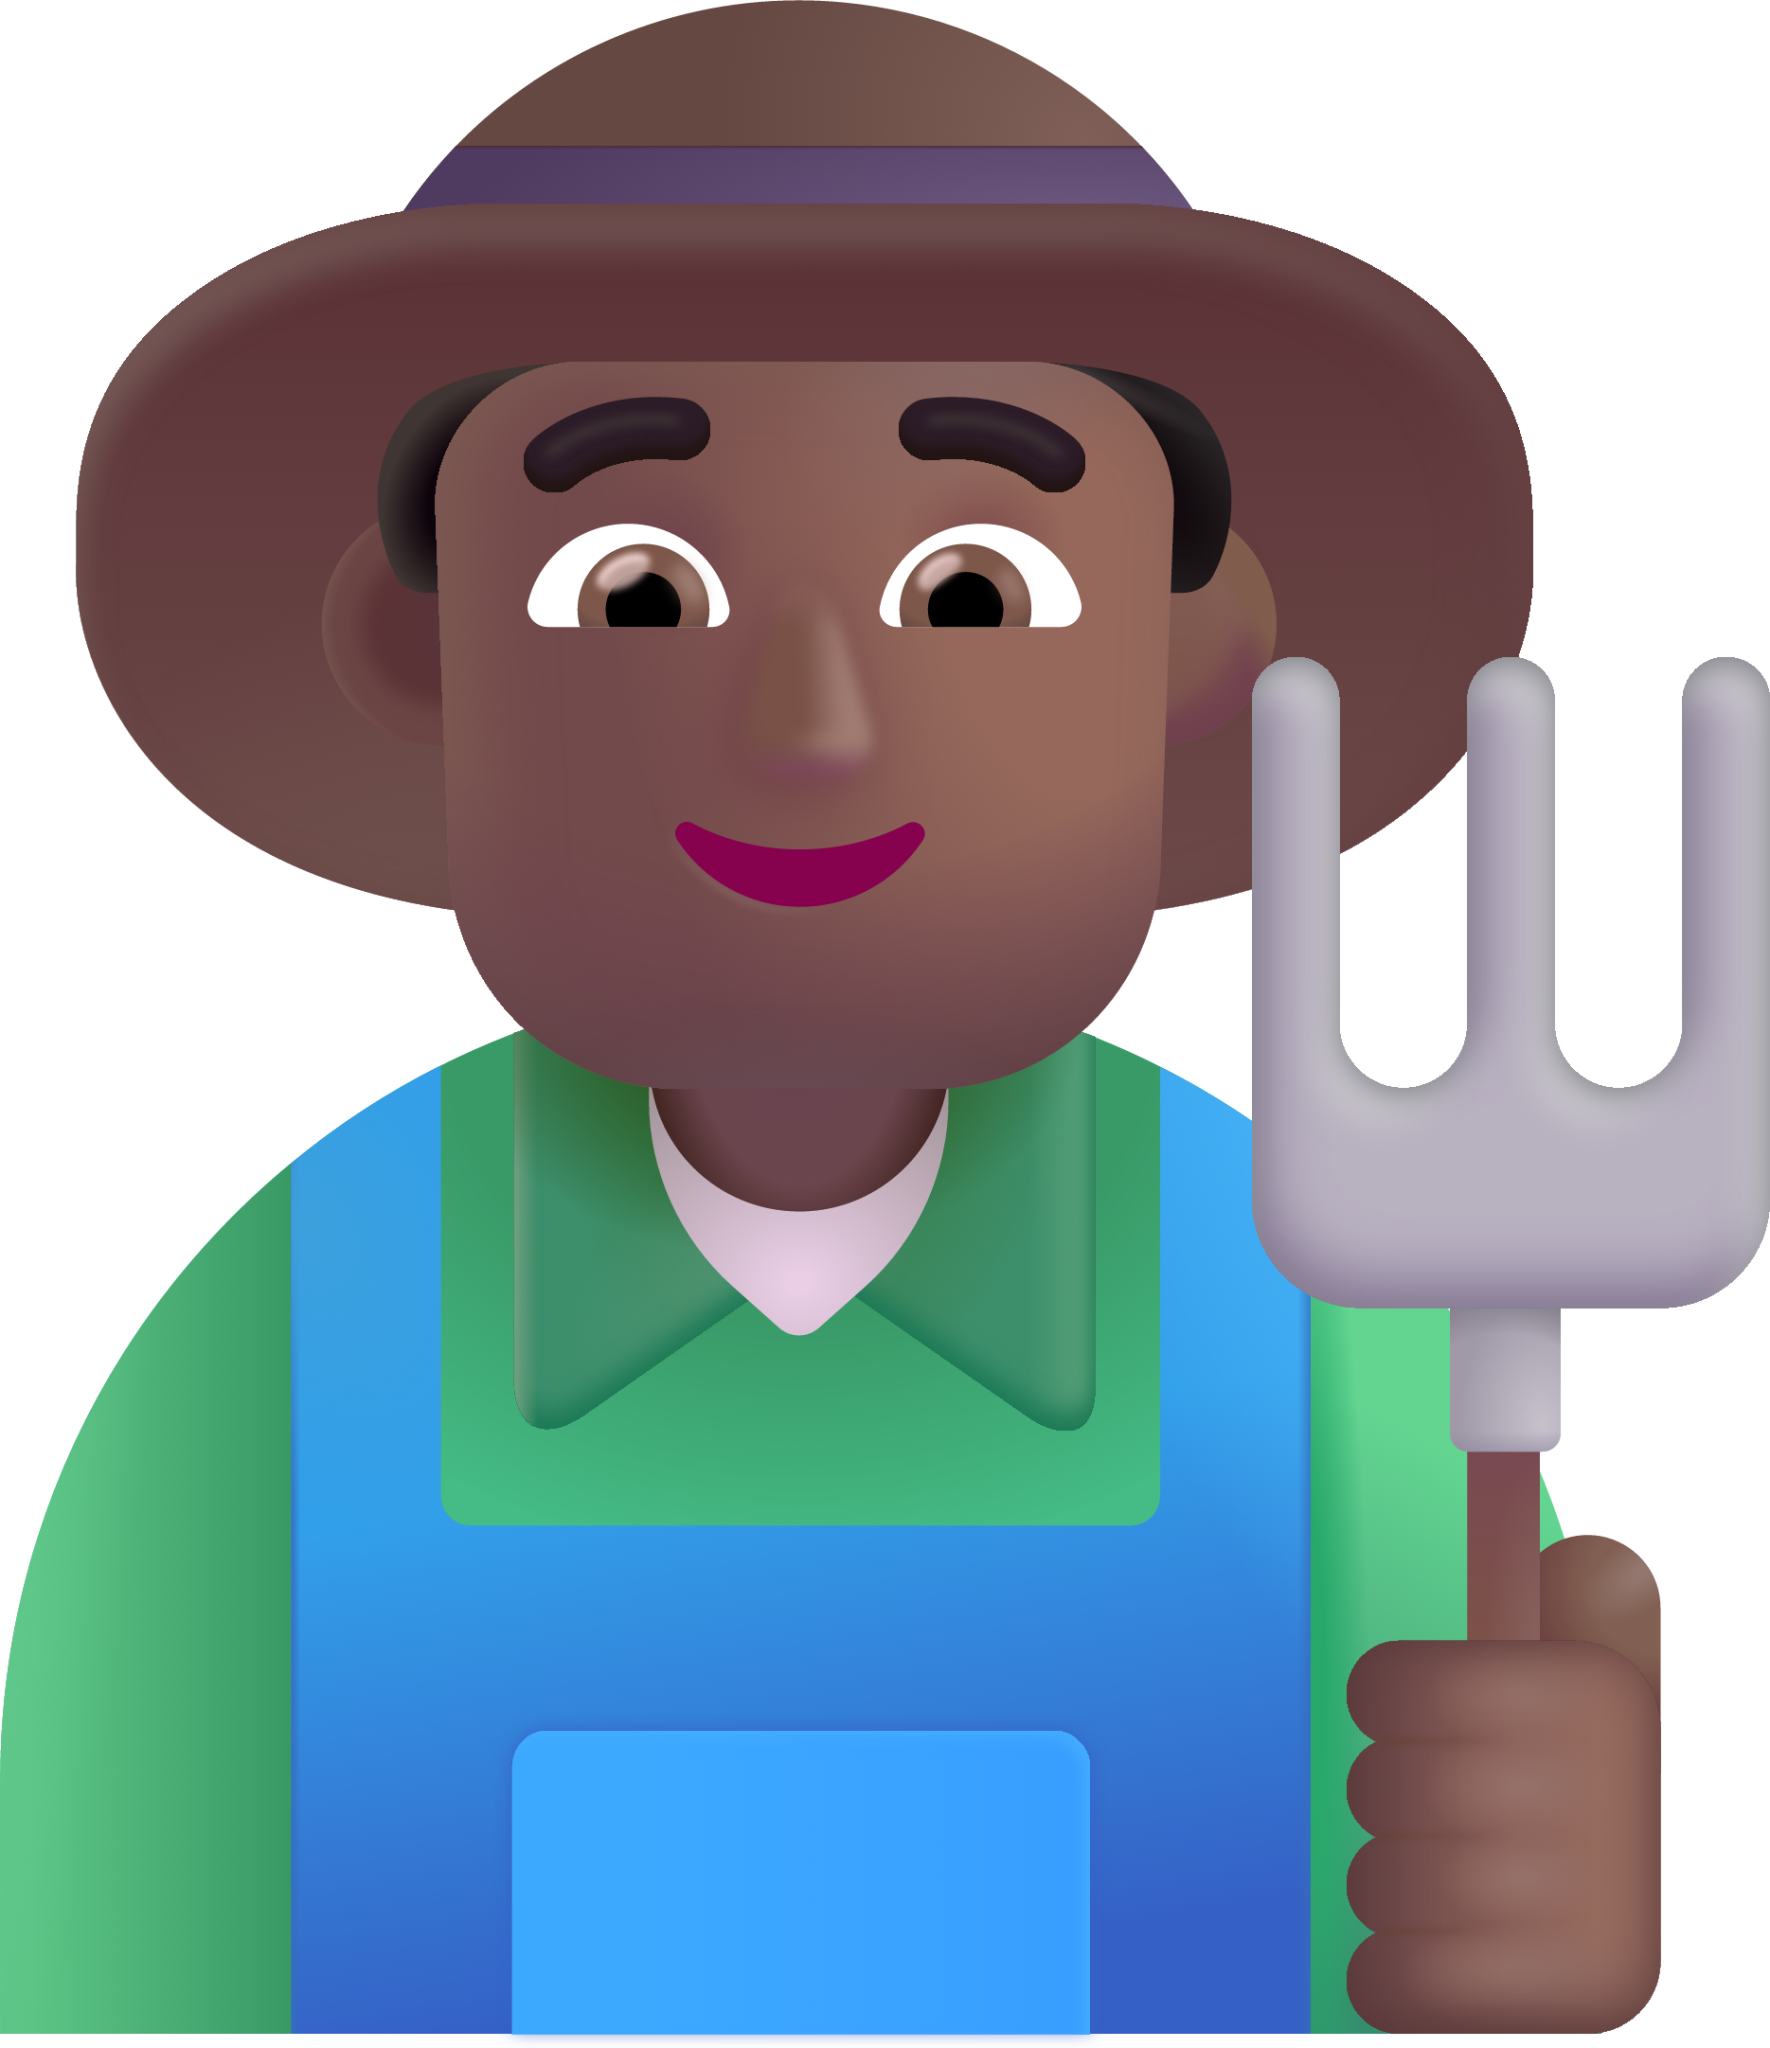 man farmer medium dark emoji